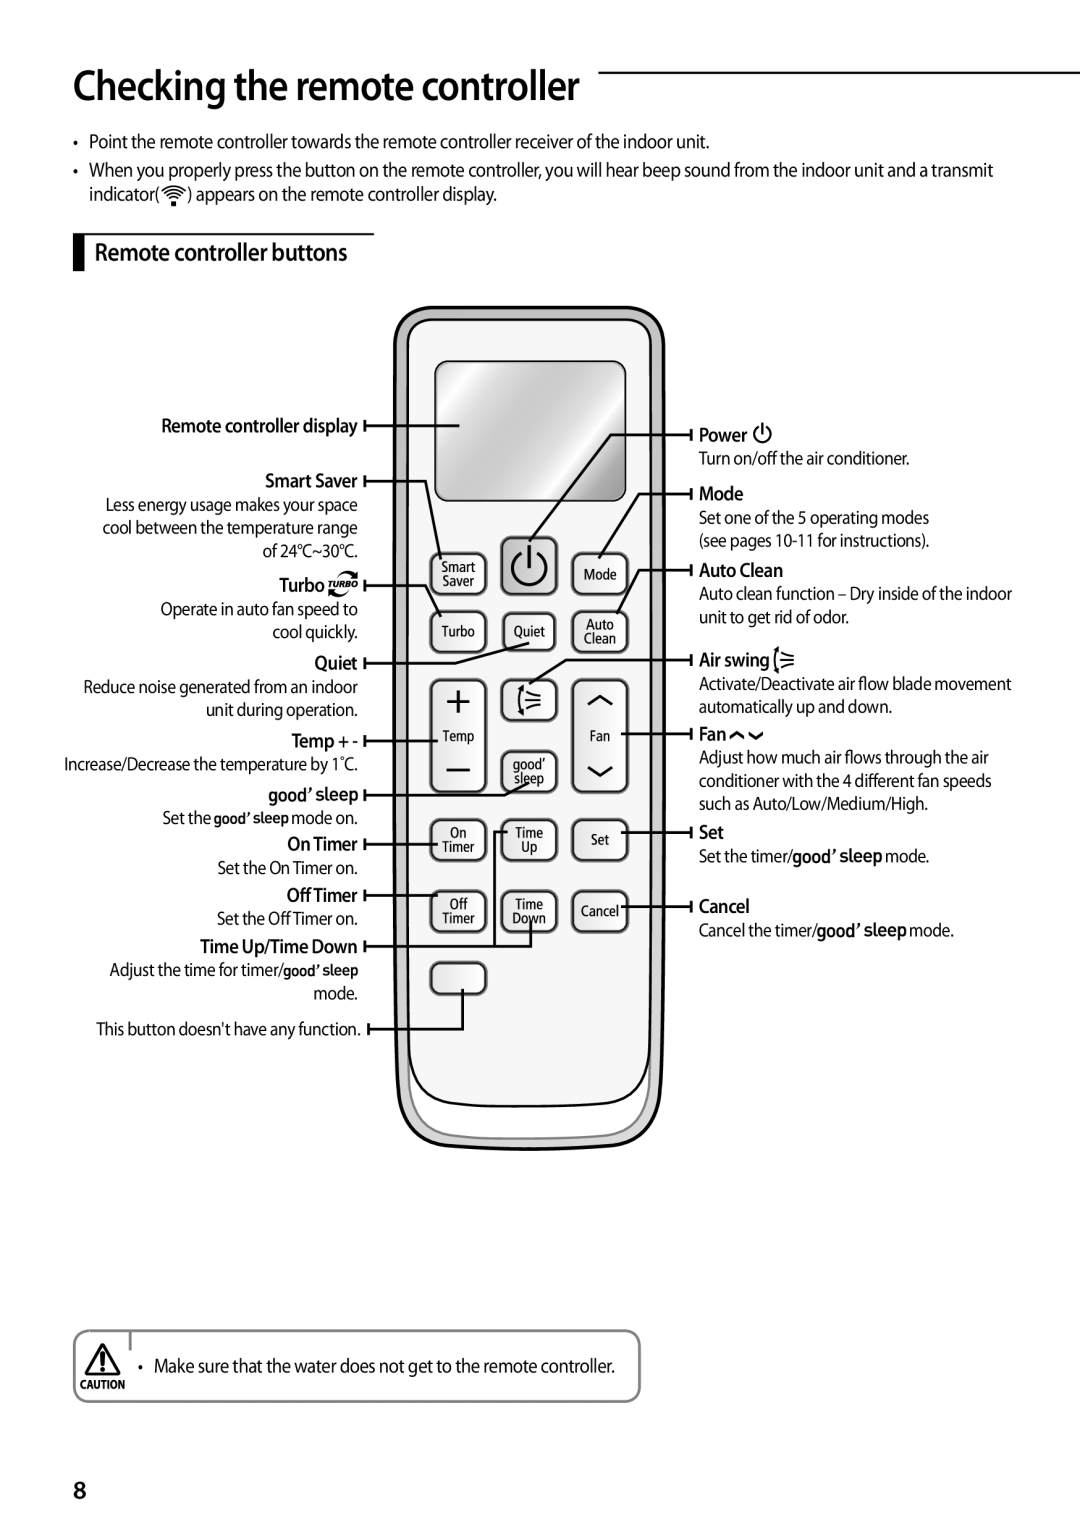 Samsung AQV12PSAN Checking the remote controller, Remote controller buttons, Remote controller display Smart Saver, Turbo 